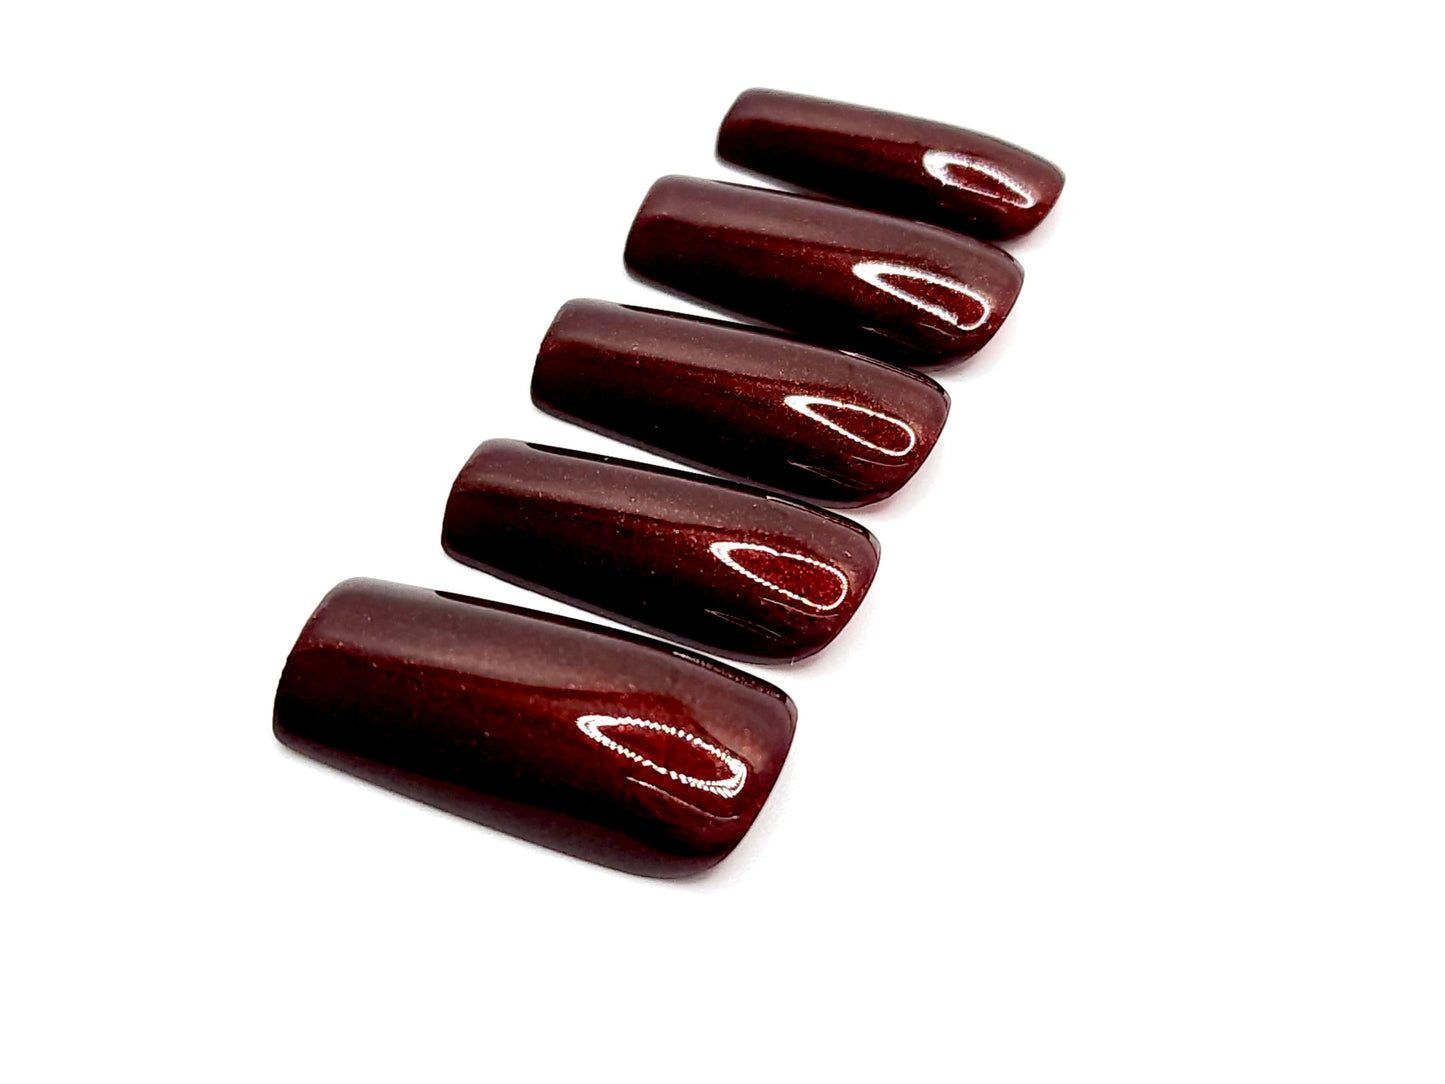 Metallic dark red Press on Nails, extra glossy metallic glue on nails.